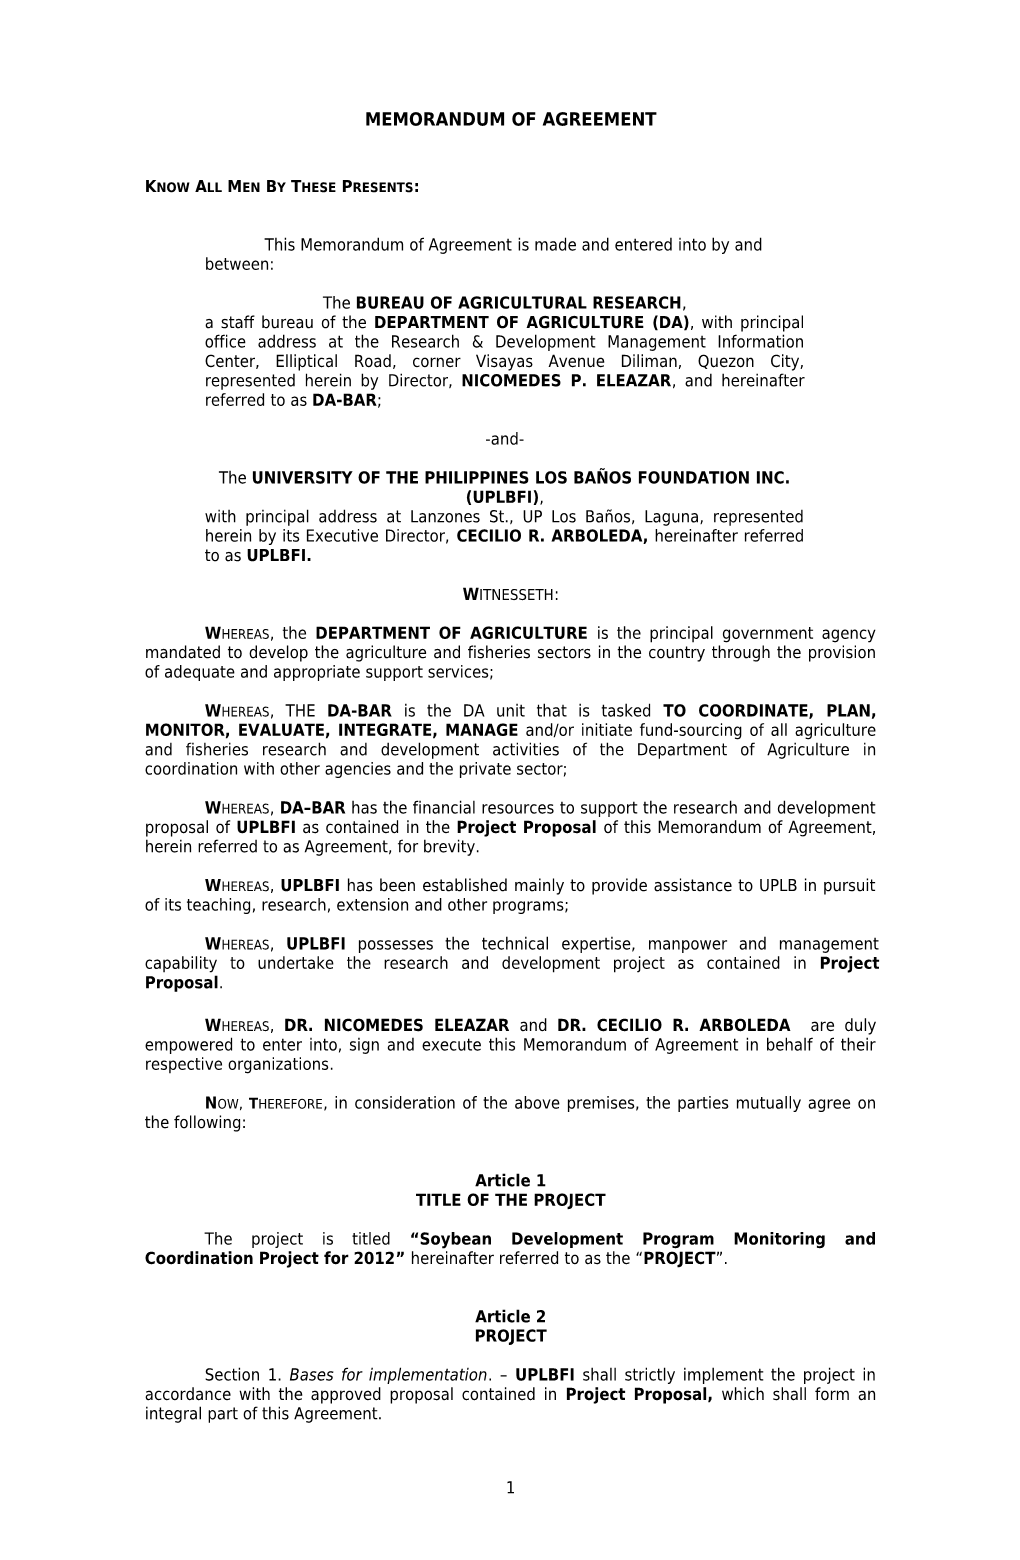 Memorandum of Agreement s6